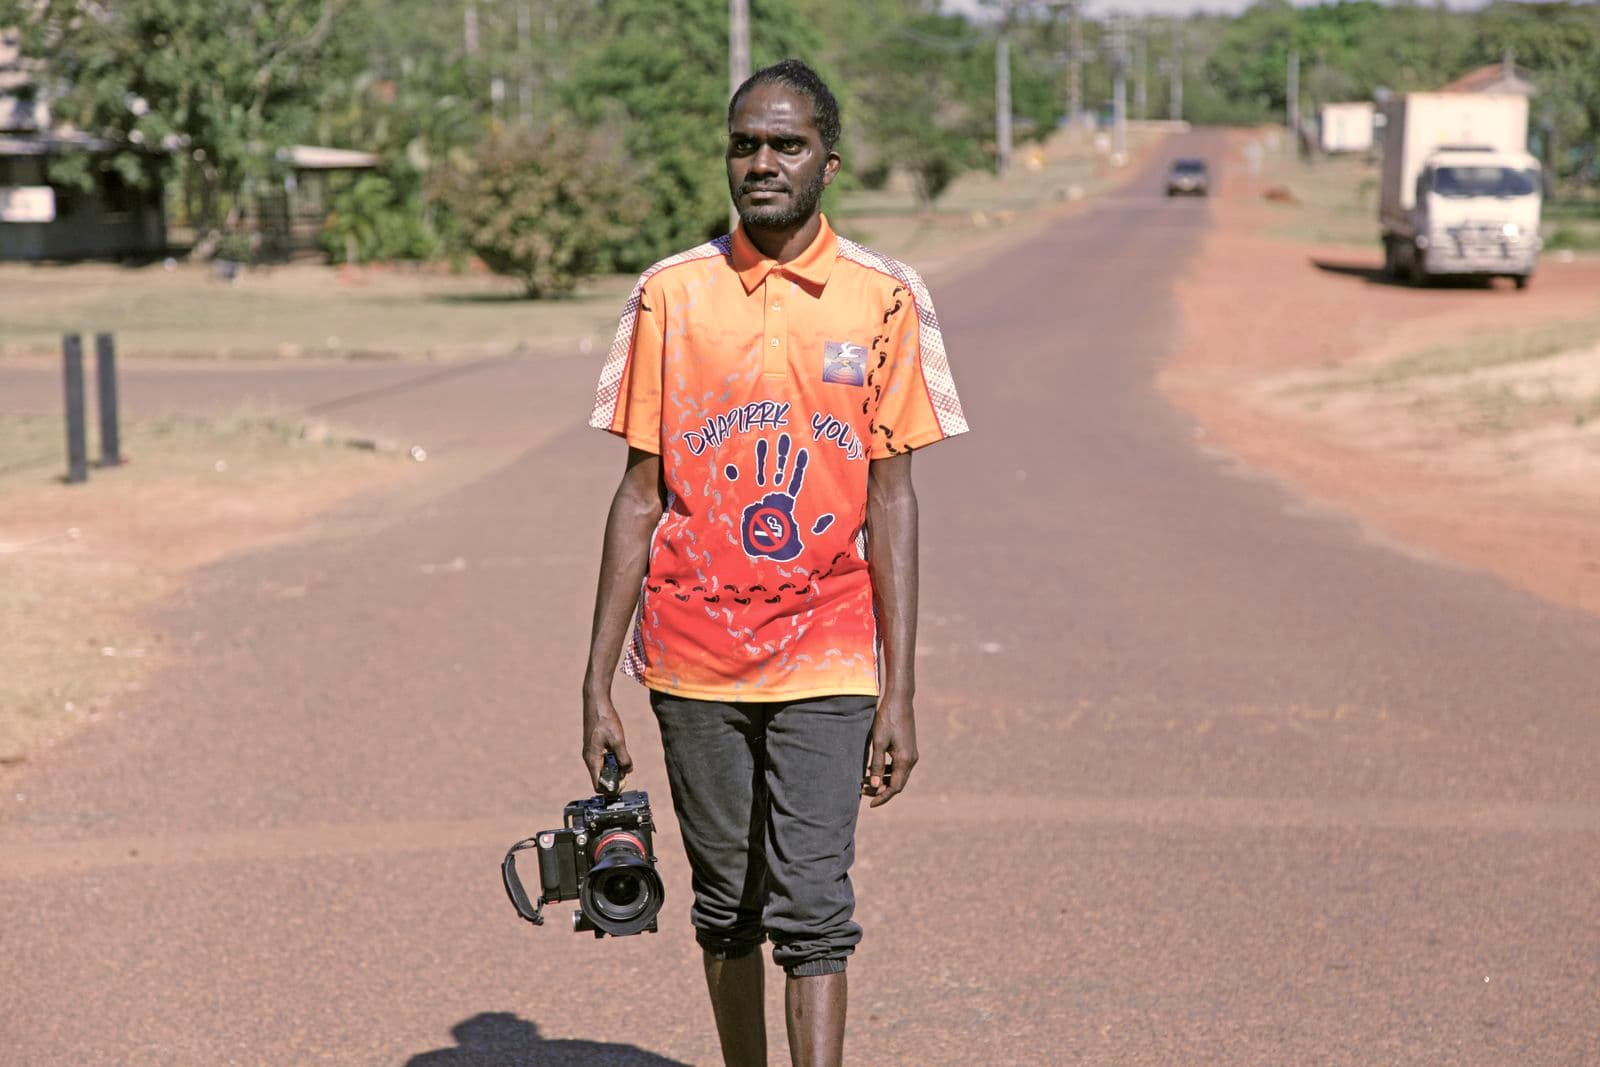 Artist Gutiŋarra Yunupiŋu carrying a camera and wearing a bright orange t-shirt walking walking through his hometown of Yirrkala in Northeast Arnhem Land